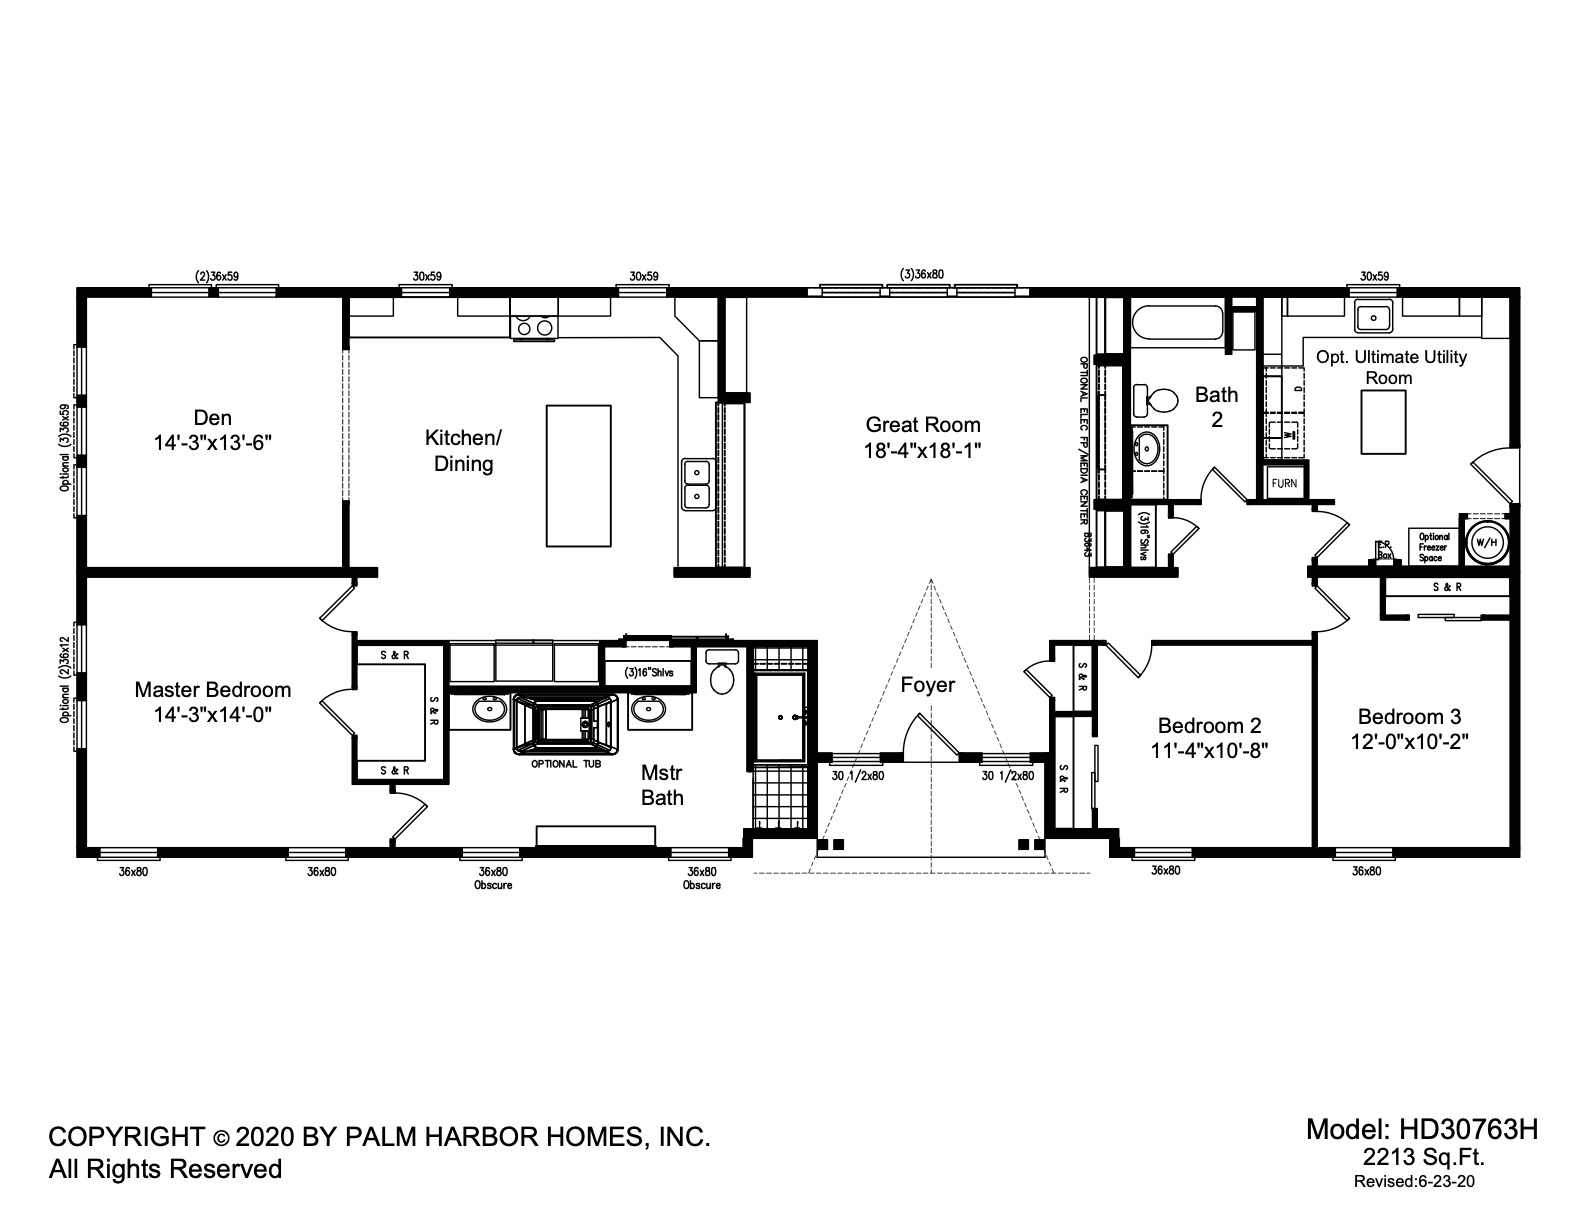 Homes Direct Modular Homes - Model HD30763H - Floorplan